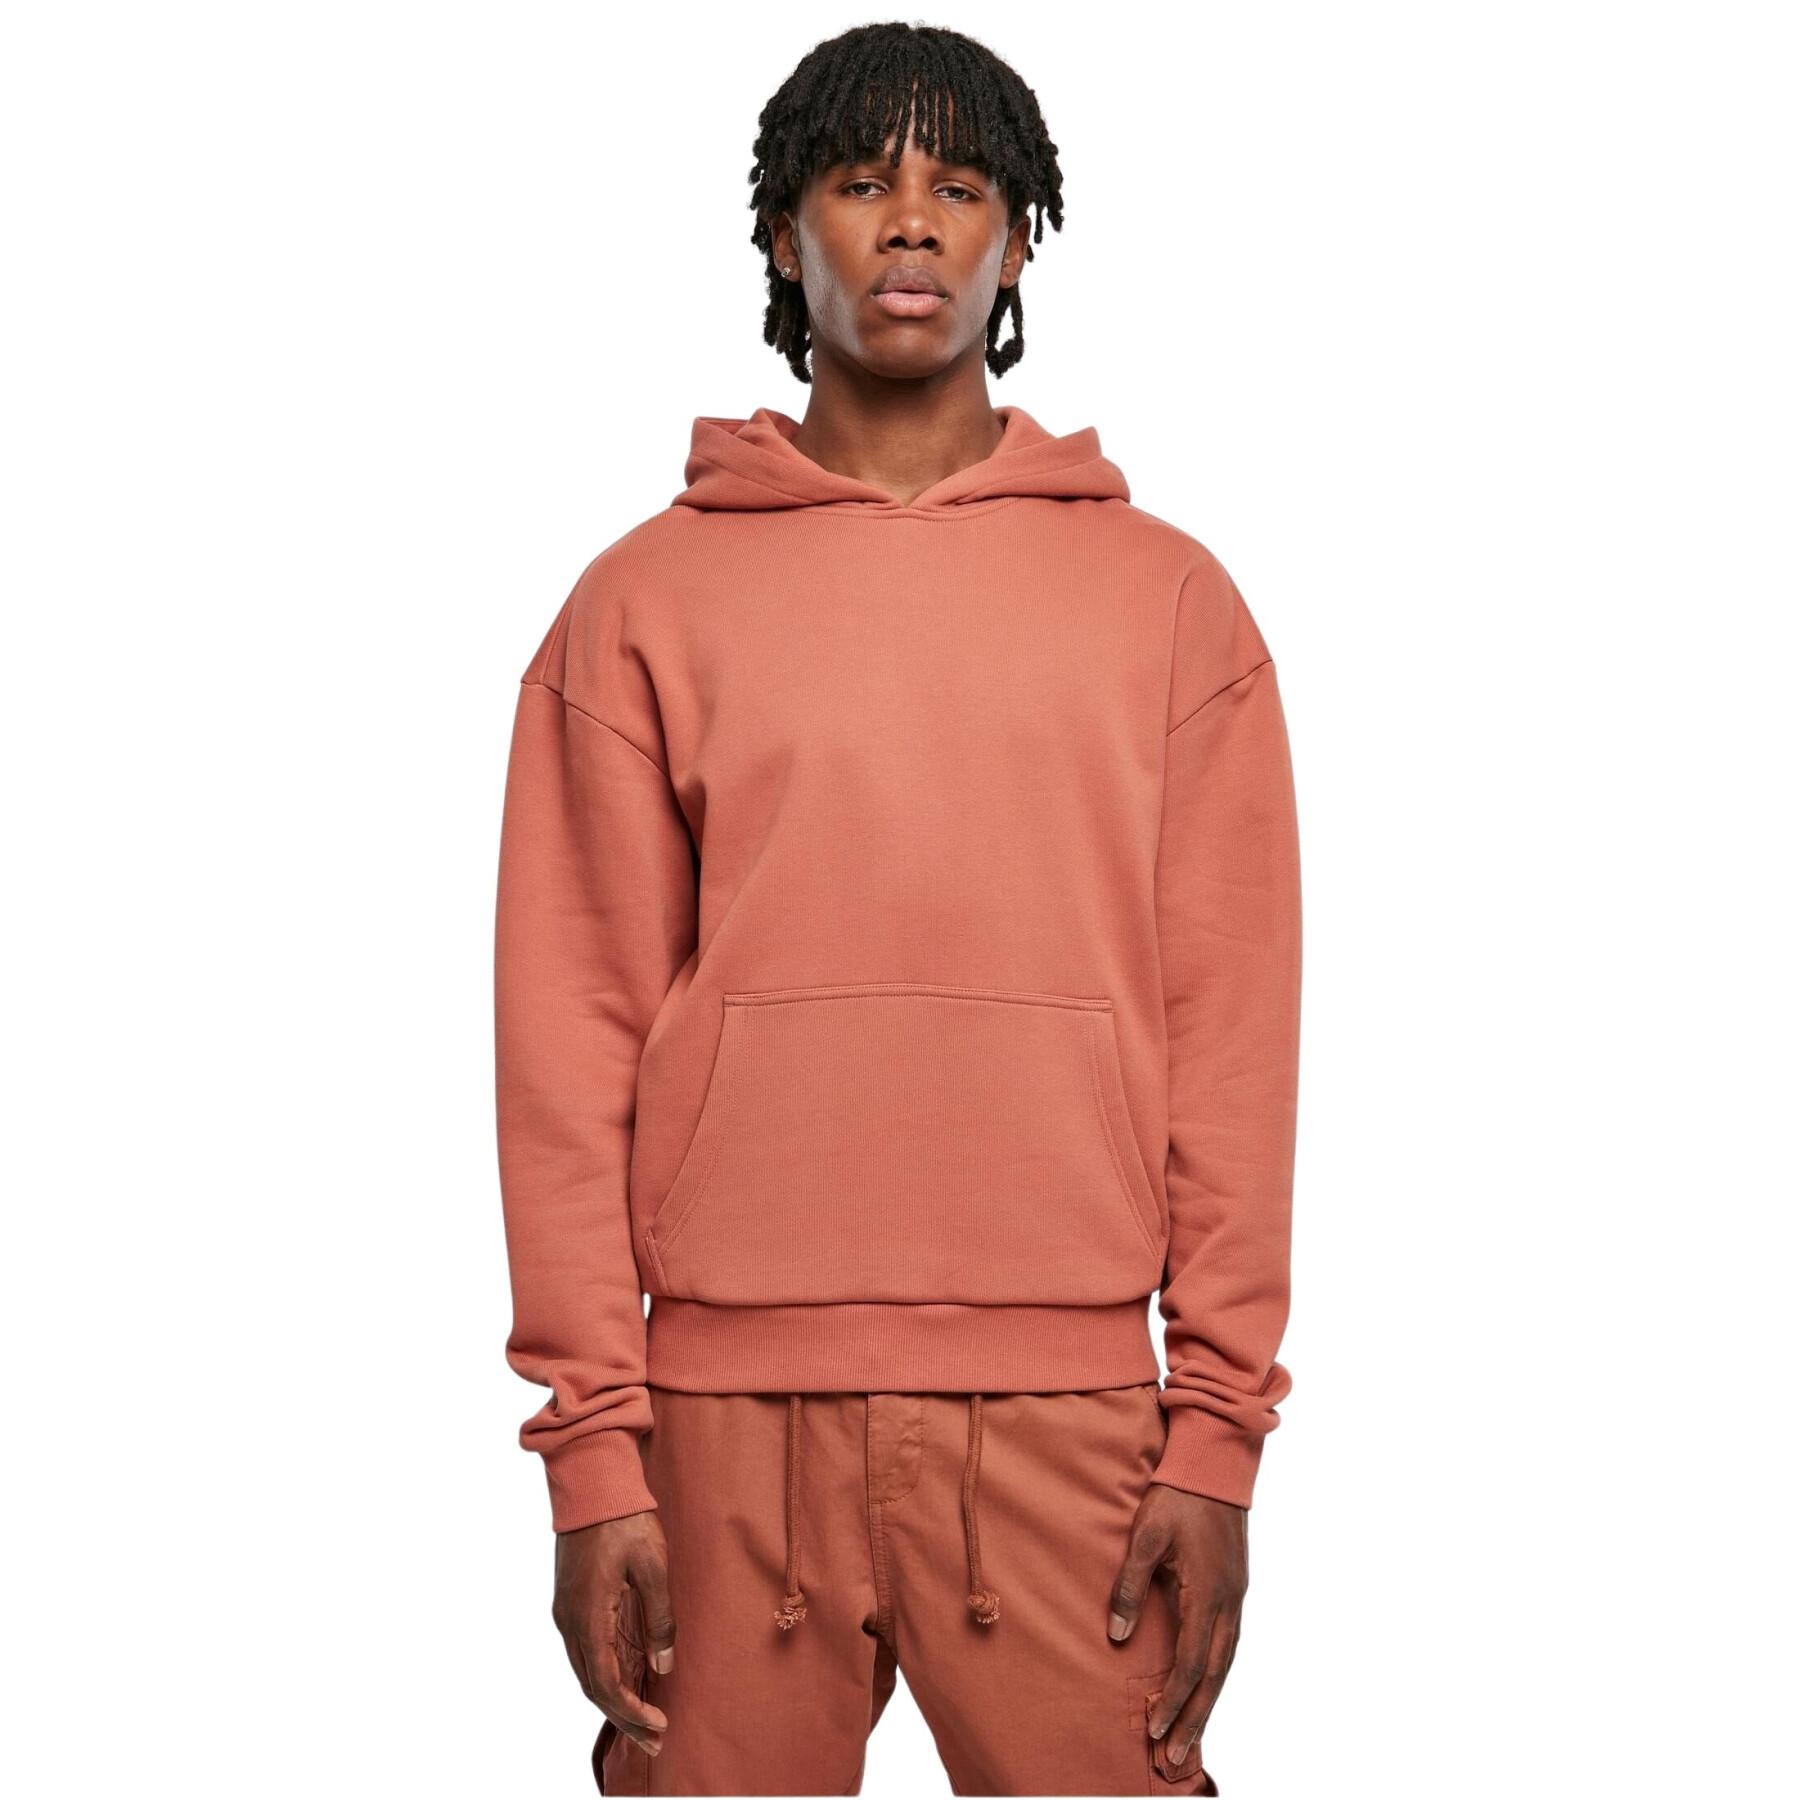 Sweatshirt thick hooded large sizes Urban Classics